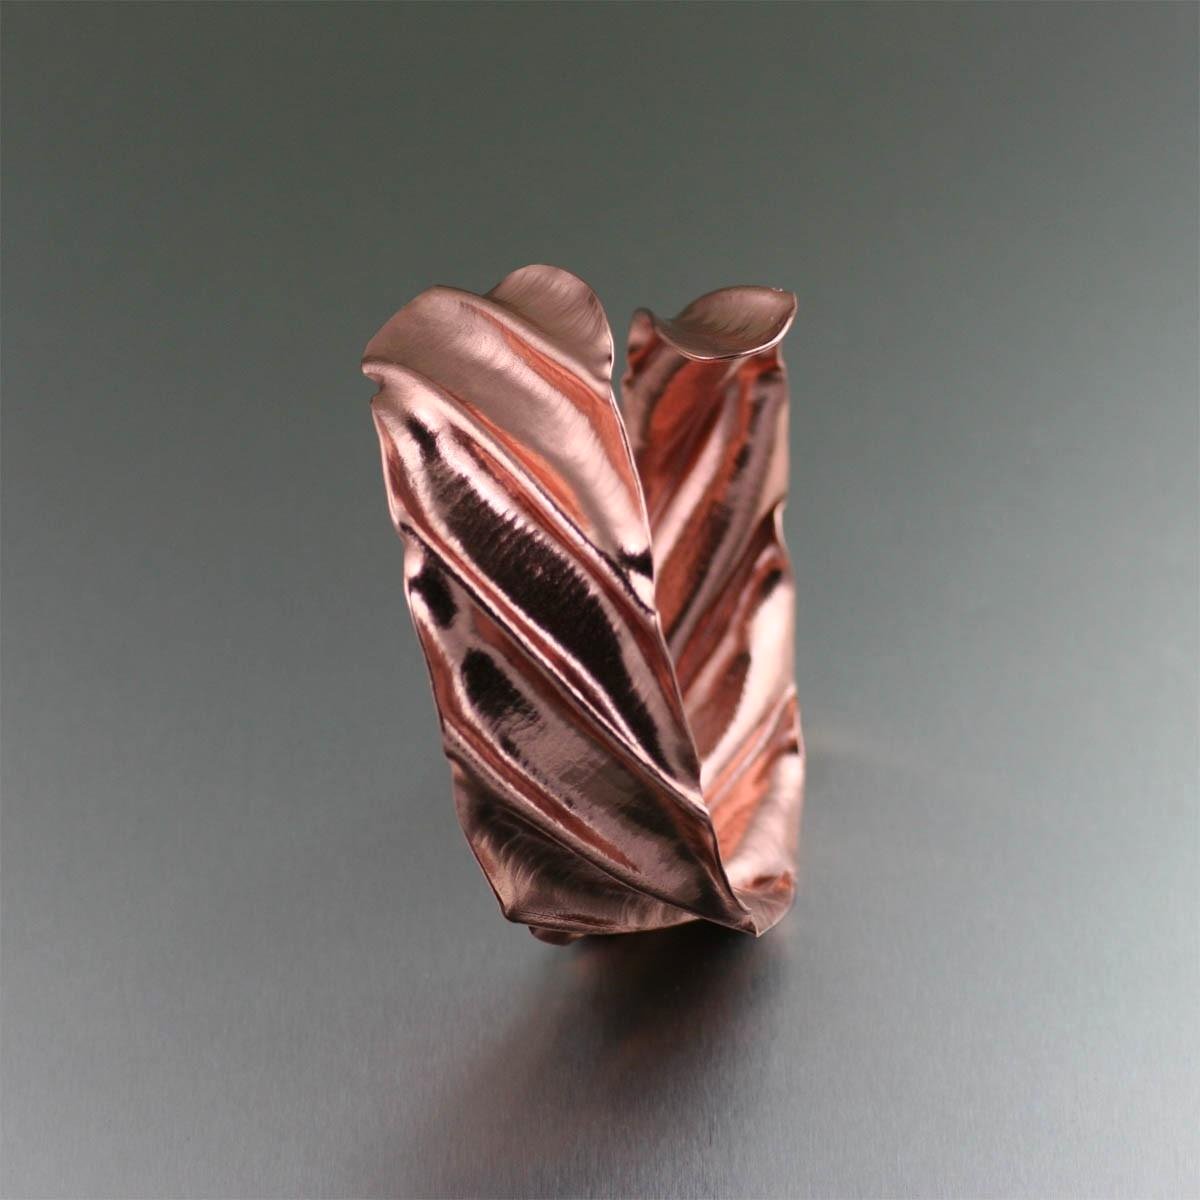 Cool Fold-formed Copper Bangle Shown on ilovecopperjewelry.com/diagonal-fold-… #CopperAnniversary #trendy